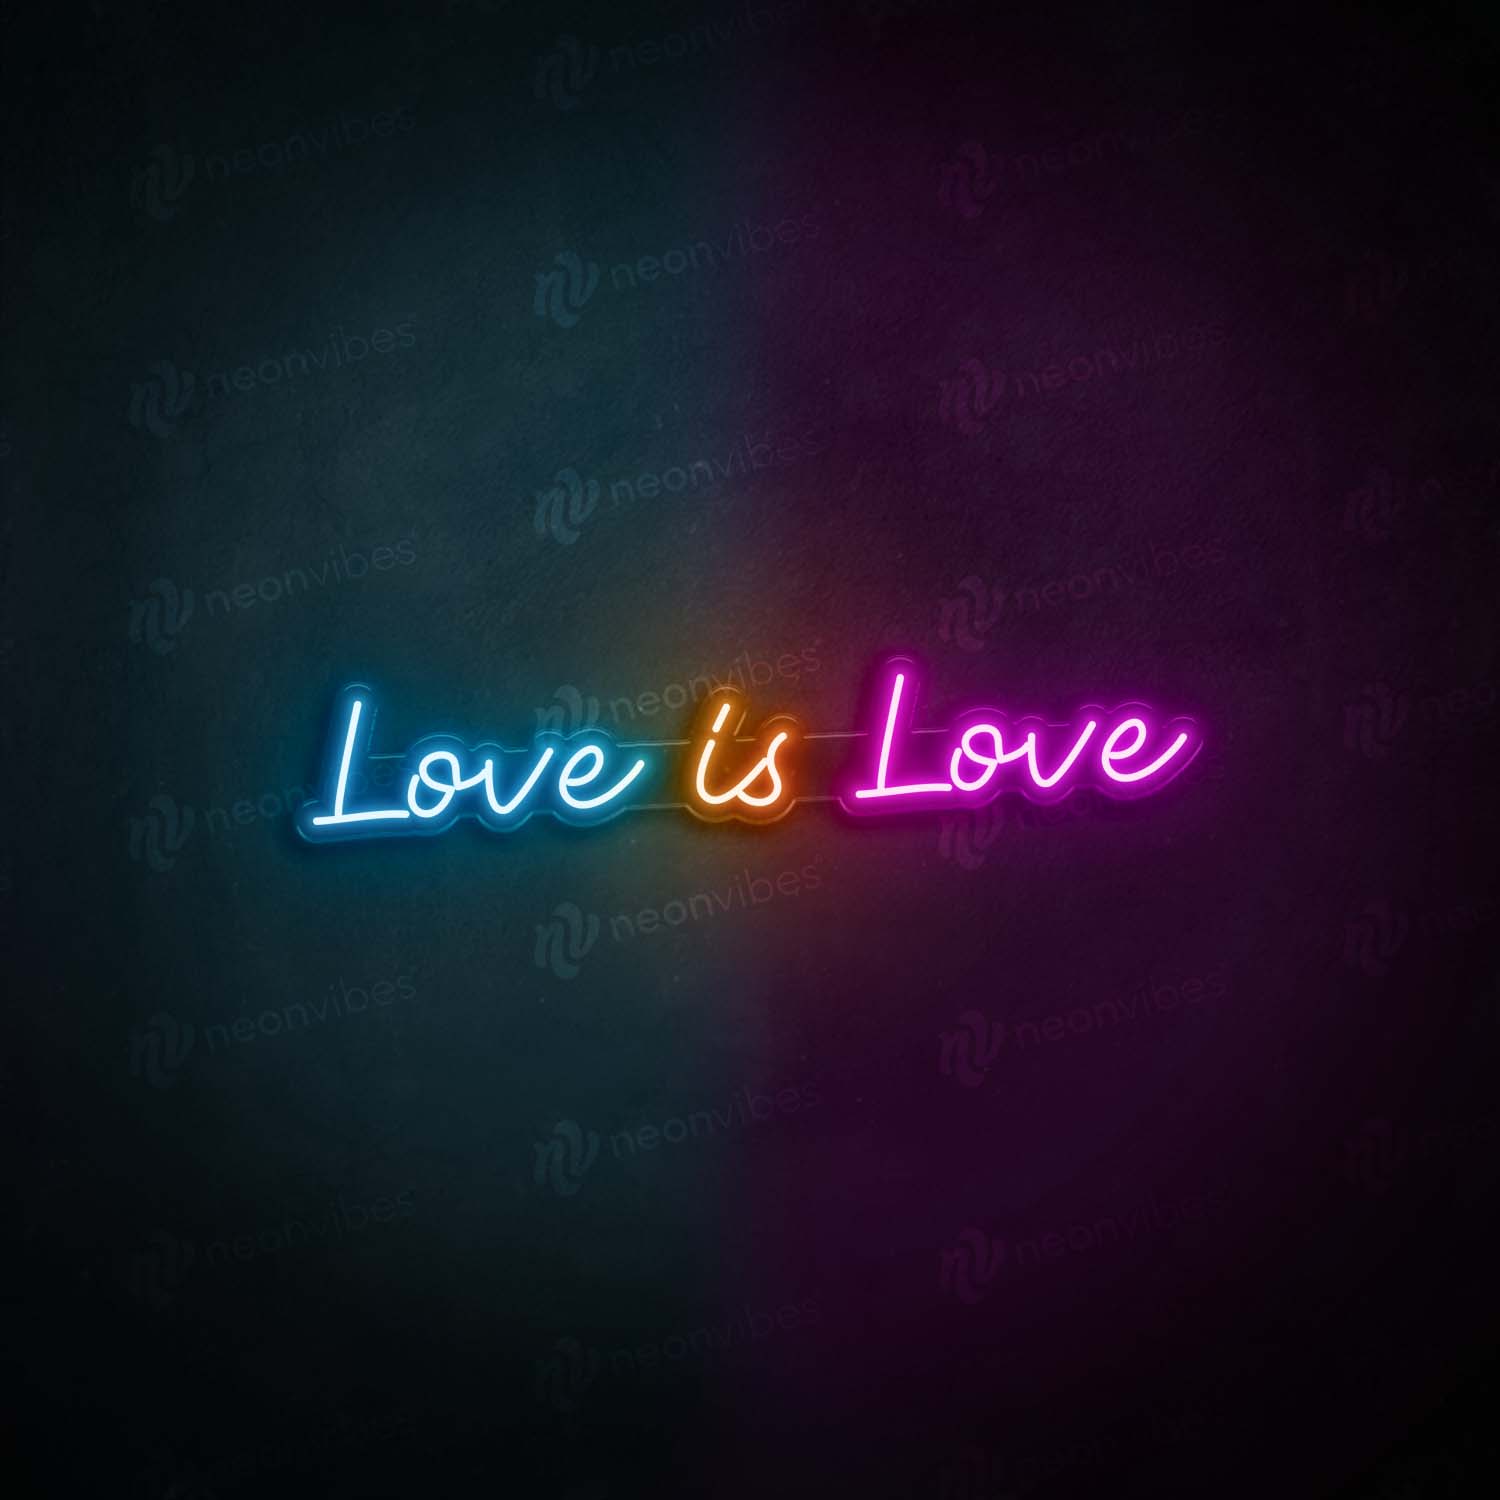 Love is love neon sign